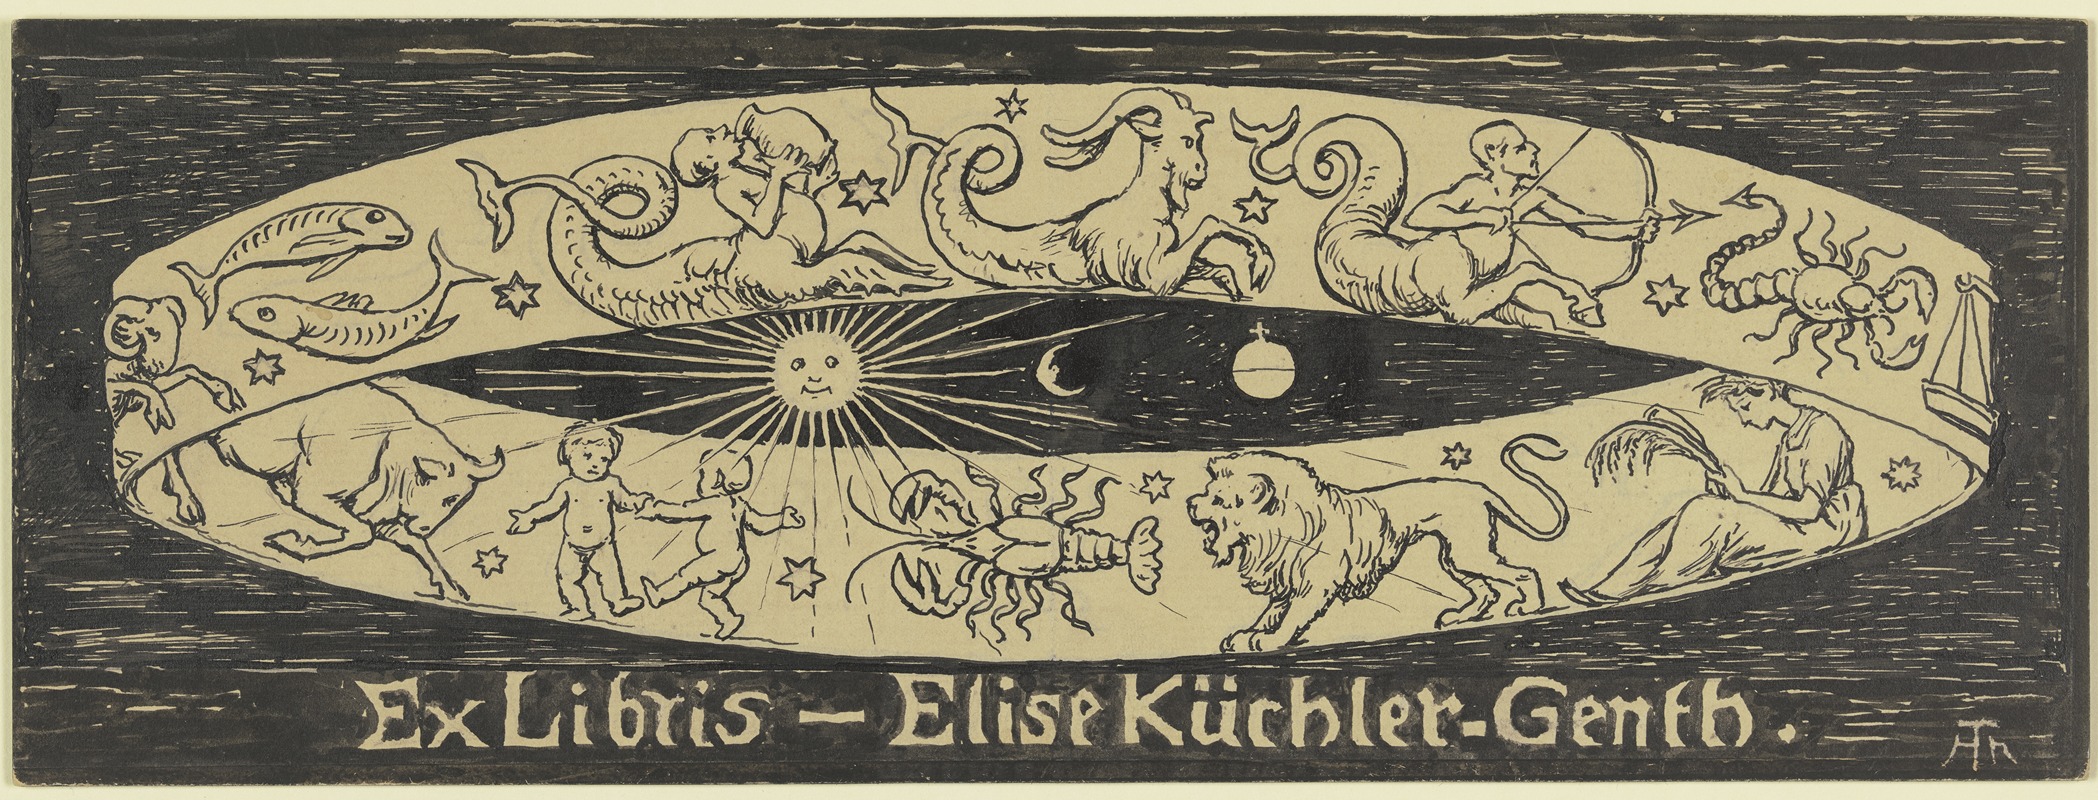 Hans Thoma - Exlibris Elise Küchler-Genth